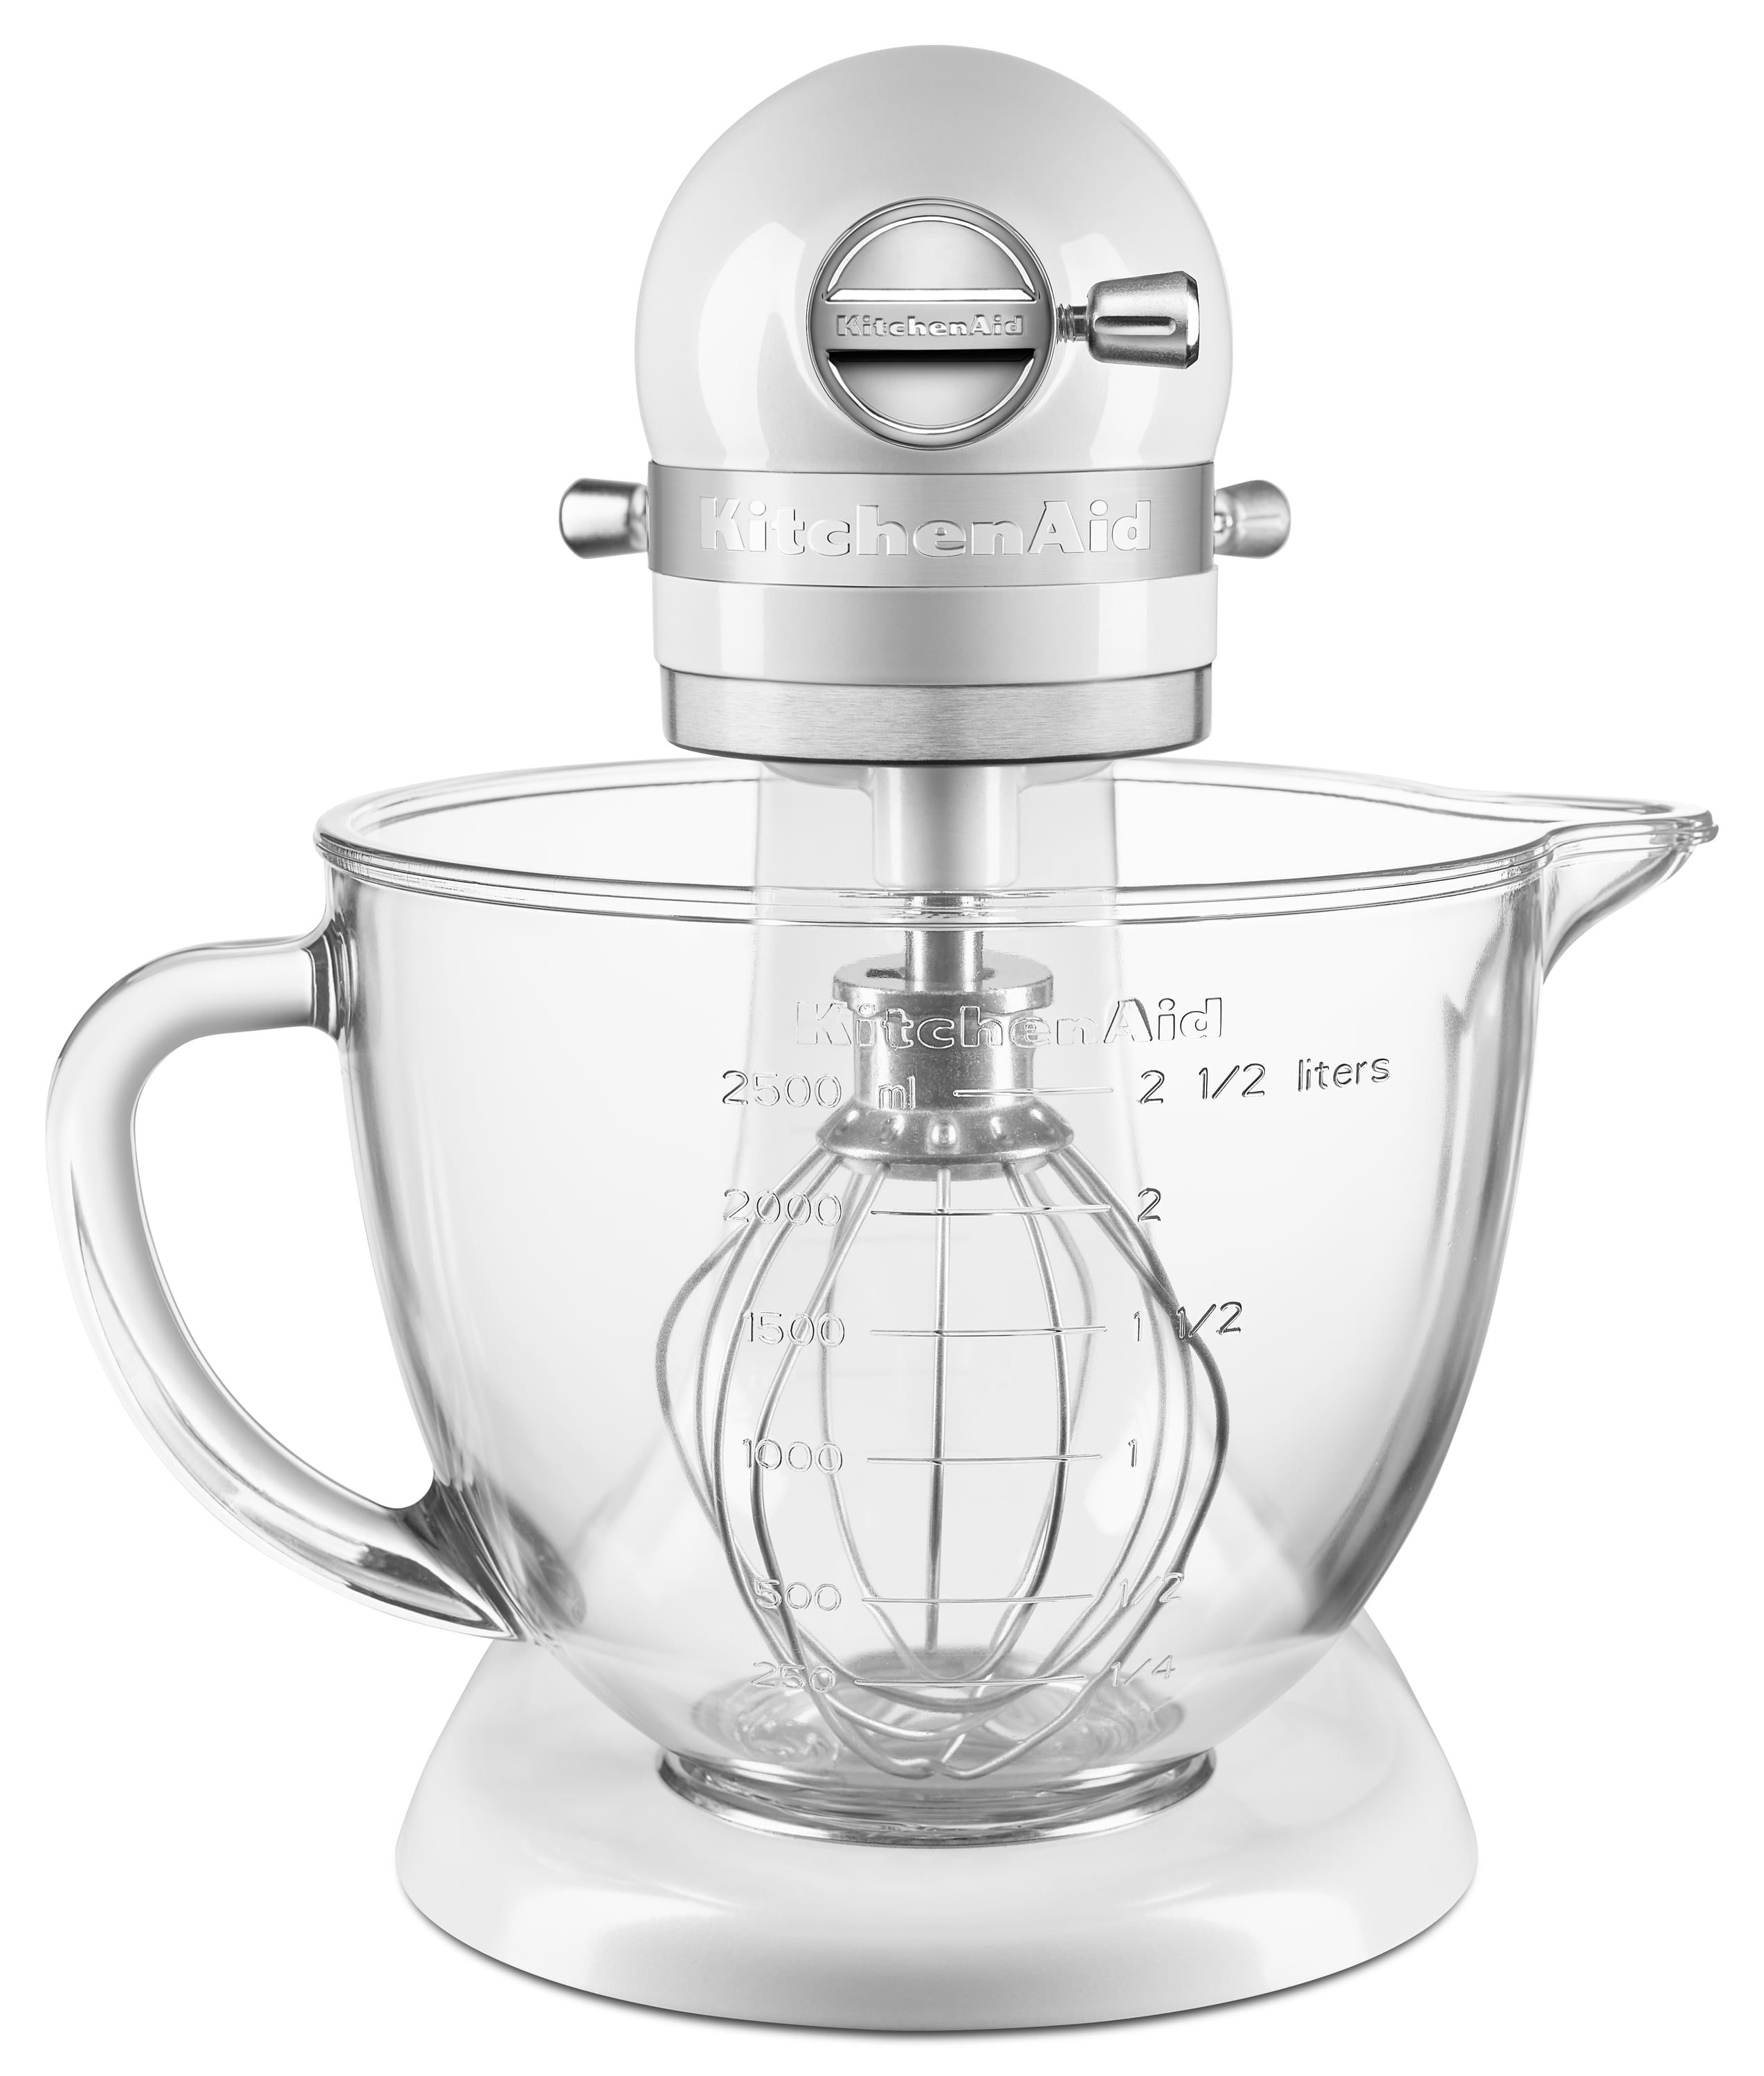 Buy KitchenAid Artisan Series Stand Mixer With Glass Bowl Sugar Pearl Silver